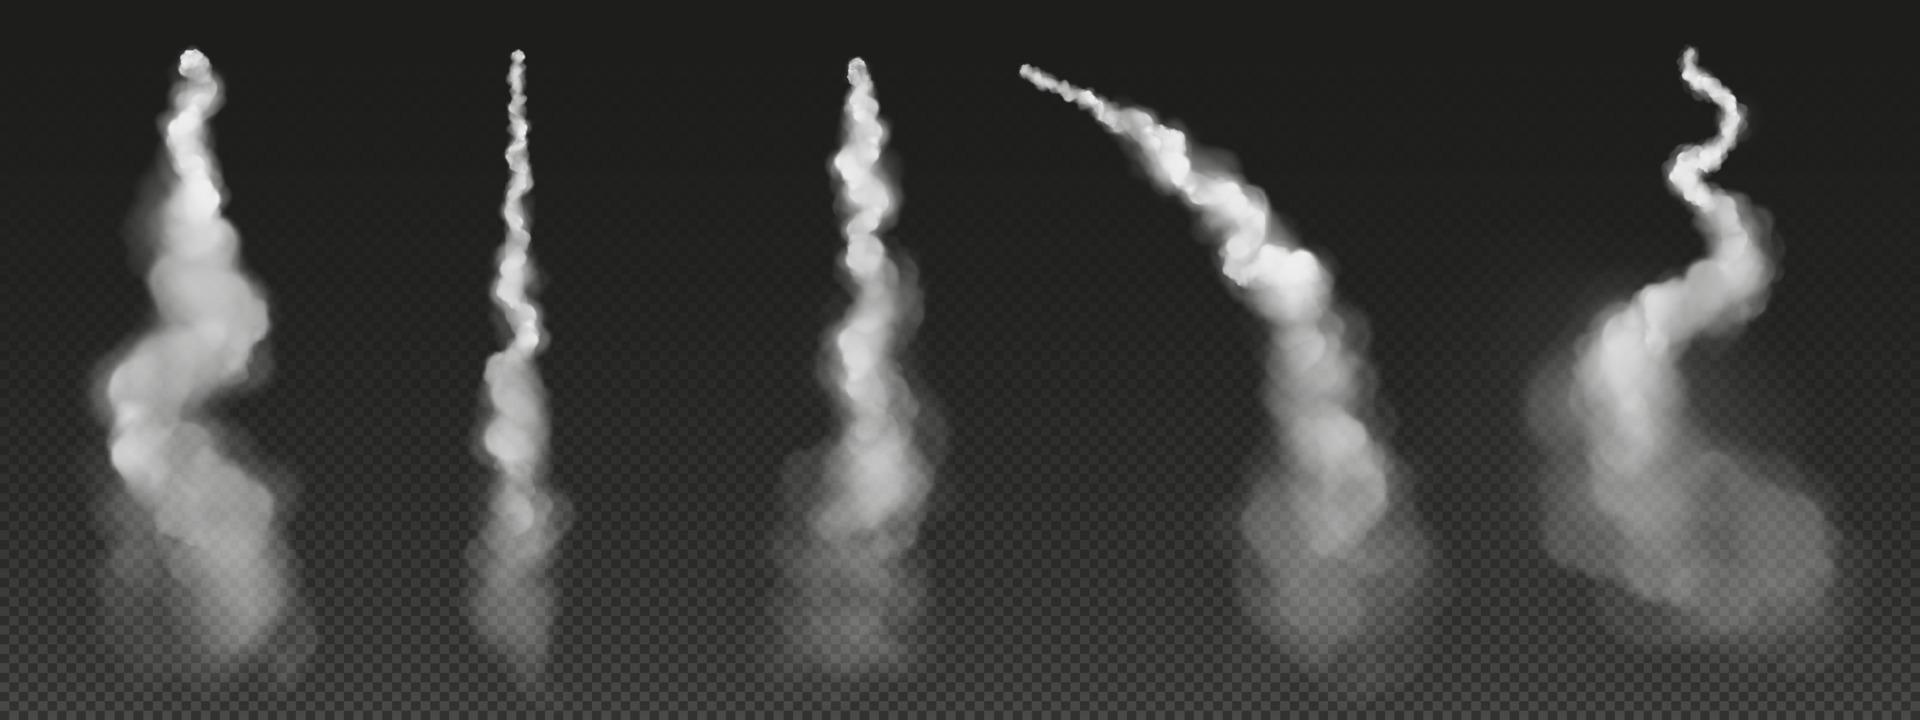 estela de cohetes, humo de avión, avión o nubes de chorro vector